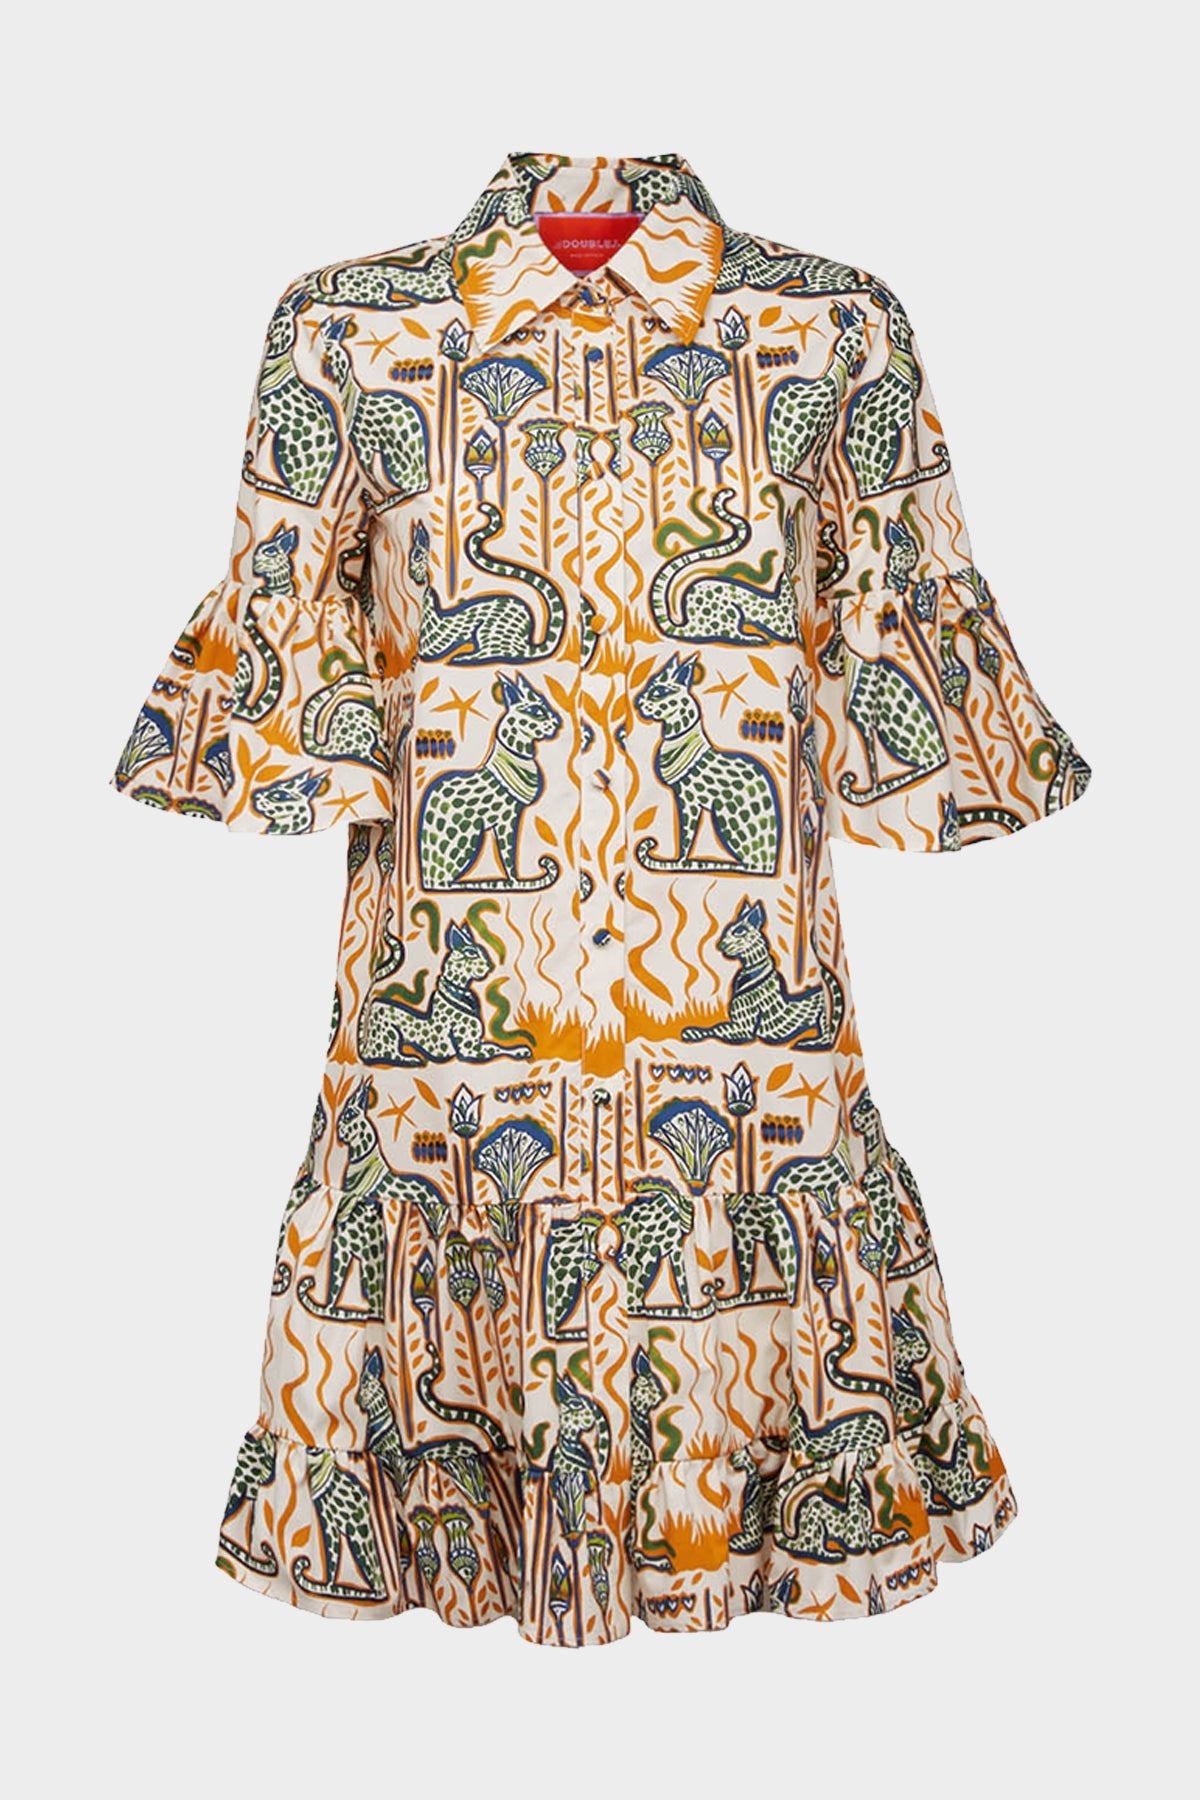 Choux Dress in Bast Ivory - shop-olivia.com